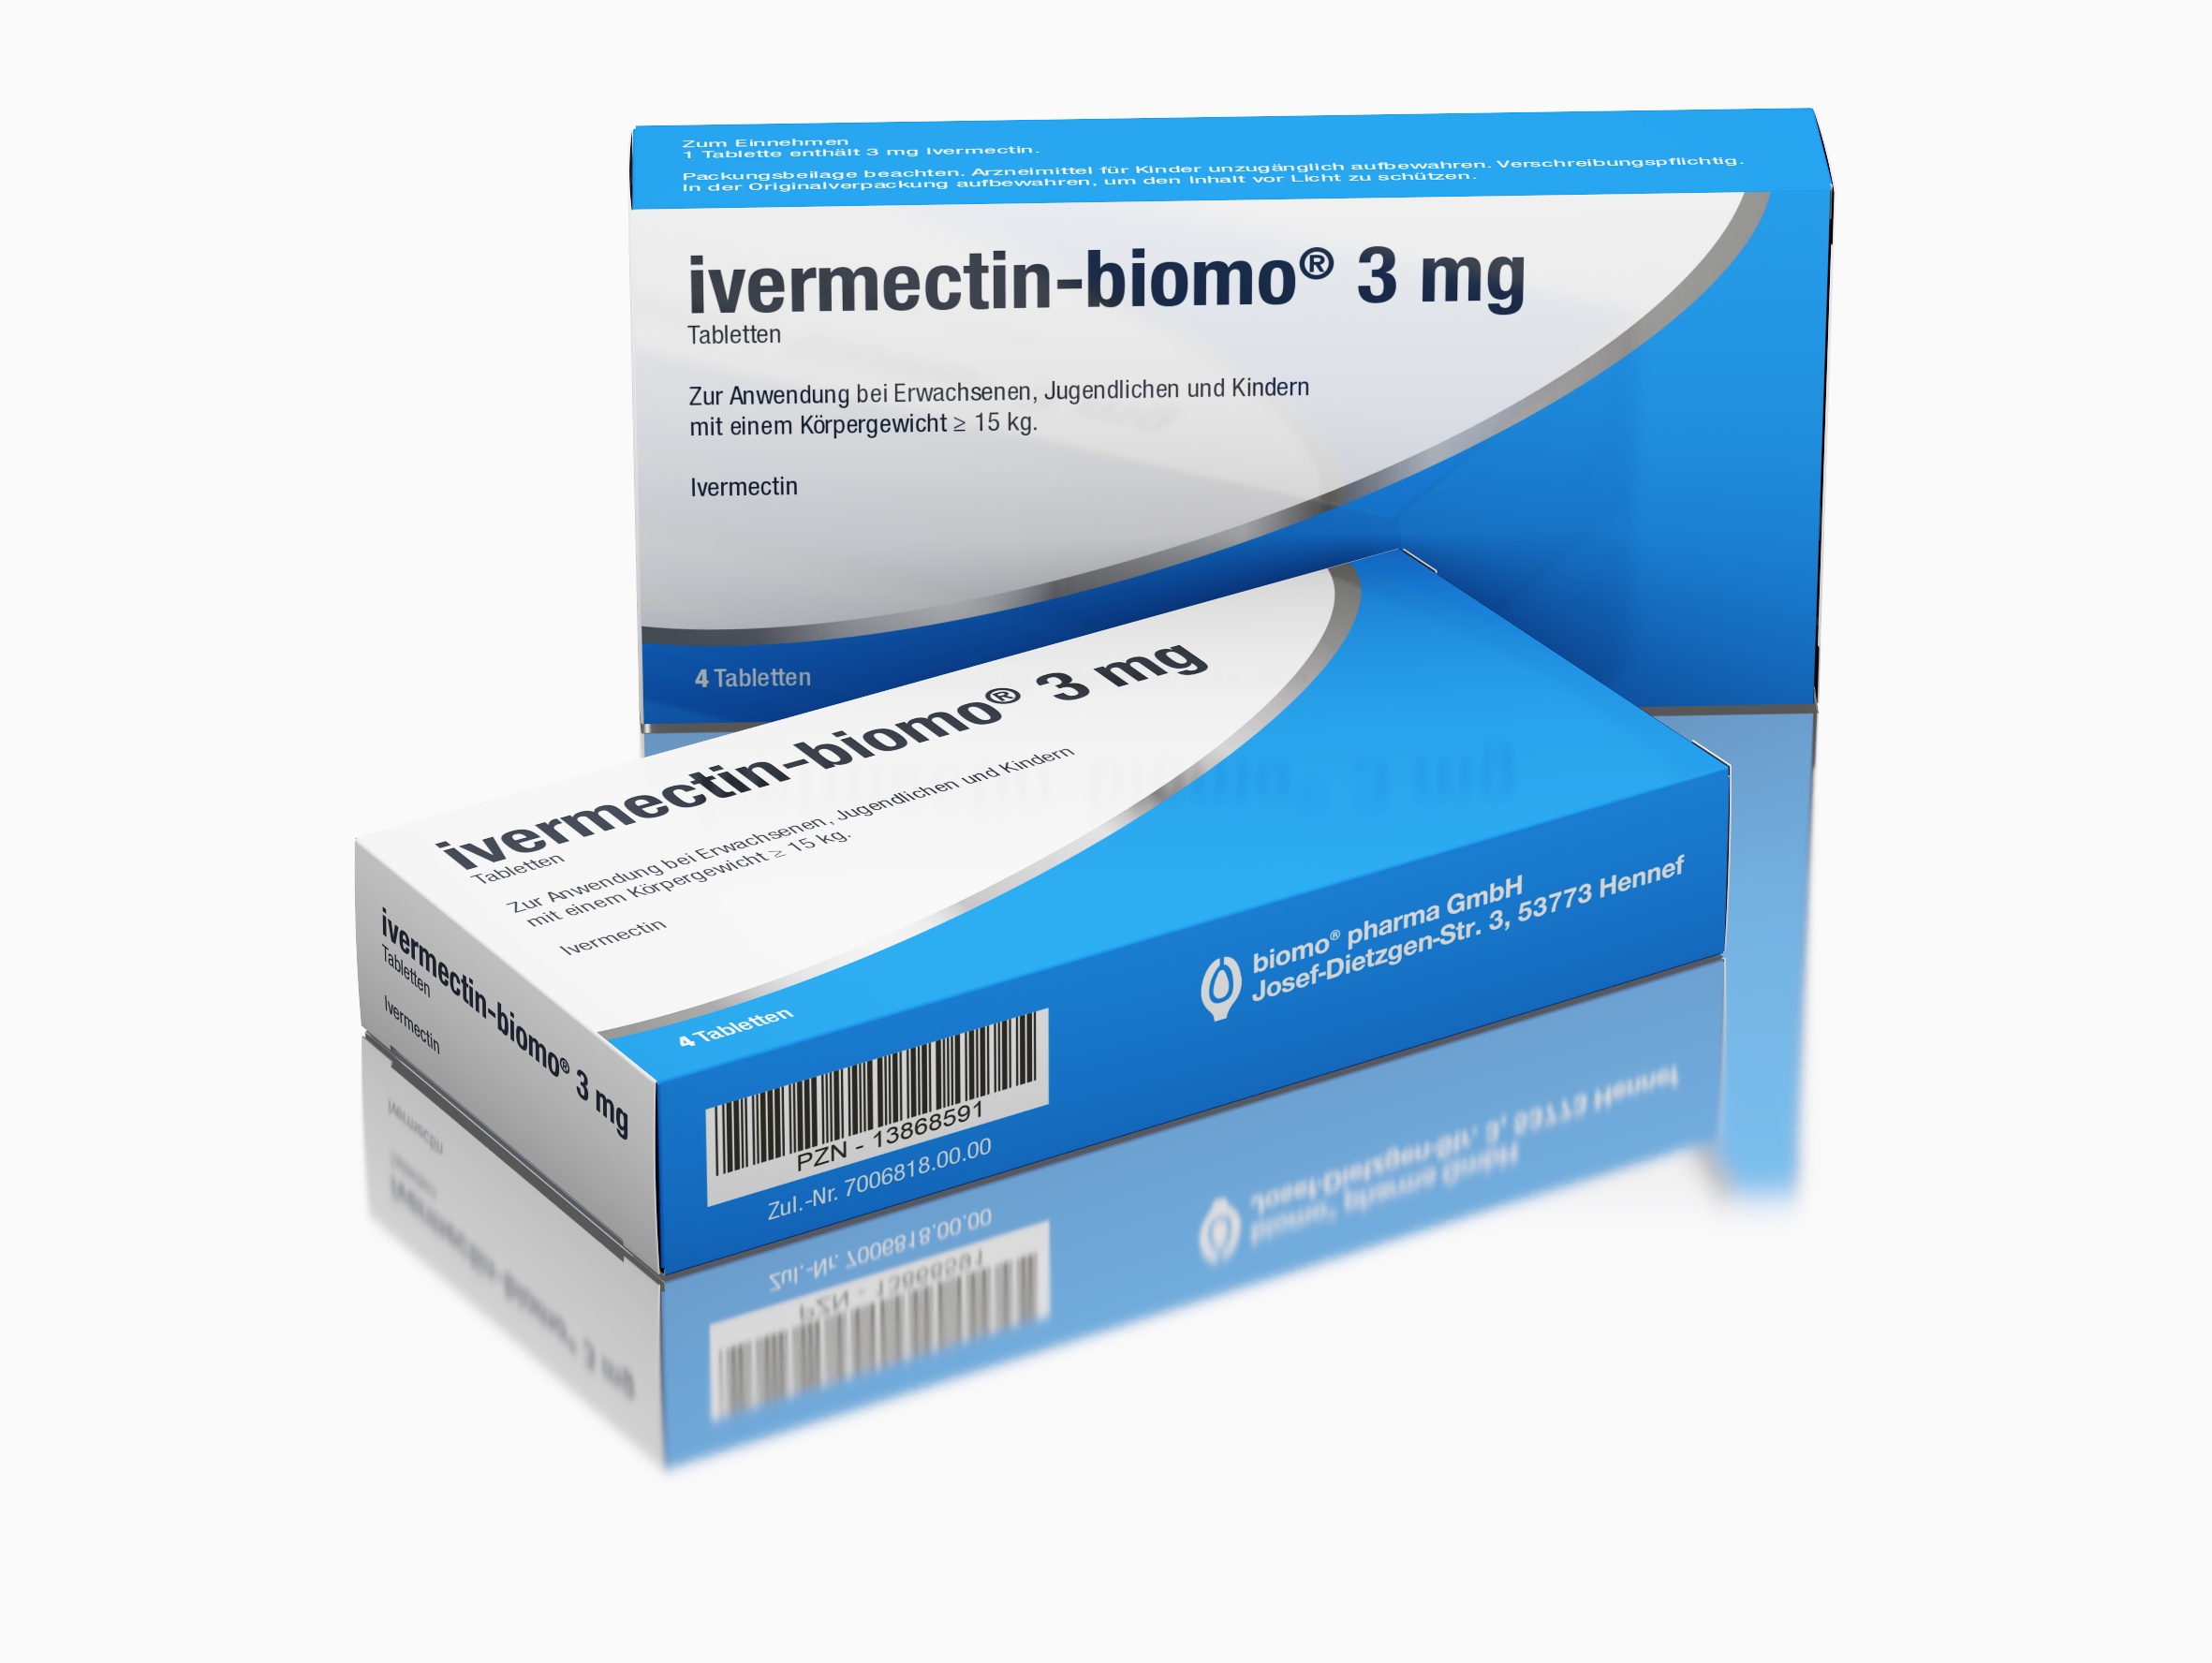 biomo pharma erweitert sein Scabies-Portfolio